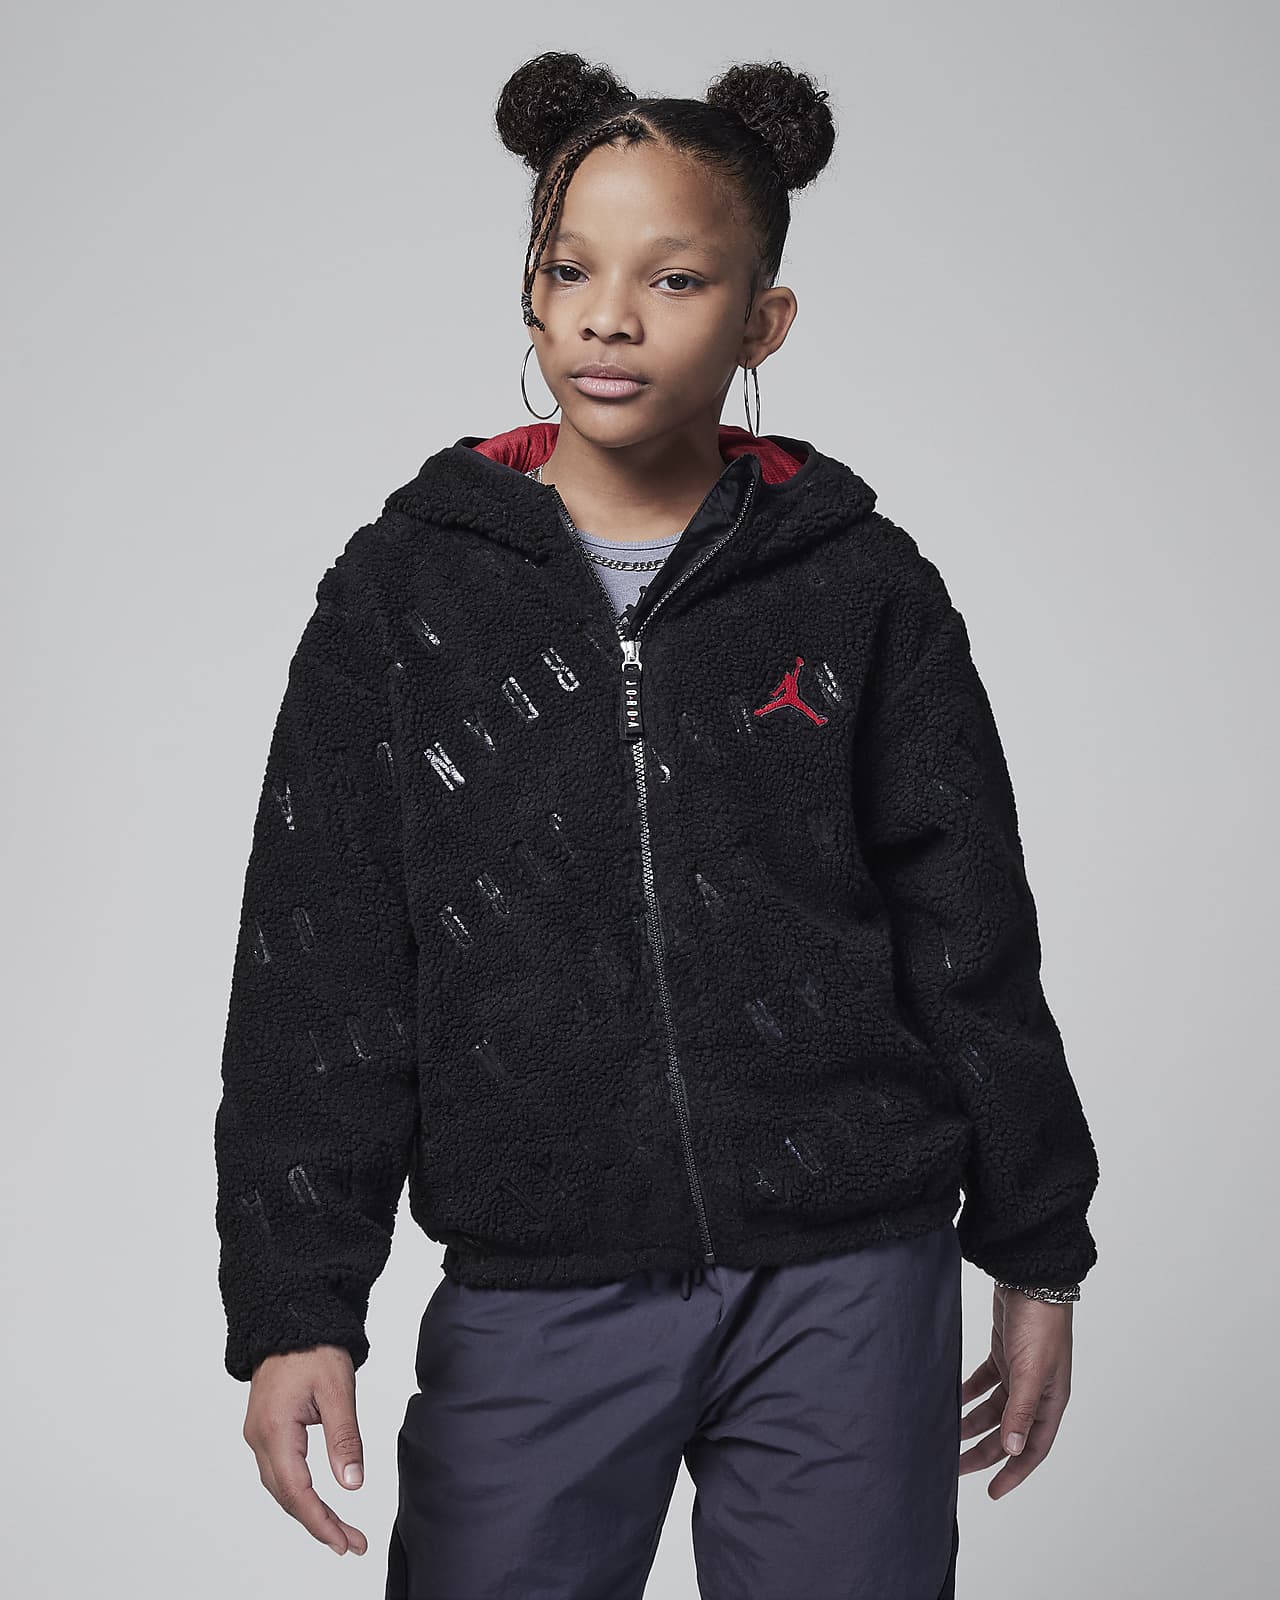 Jordan Jacquard Sherpa Jacket Jacke für ältere Kinder